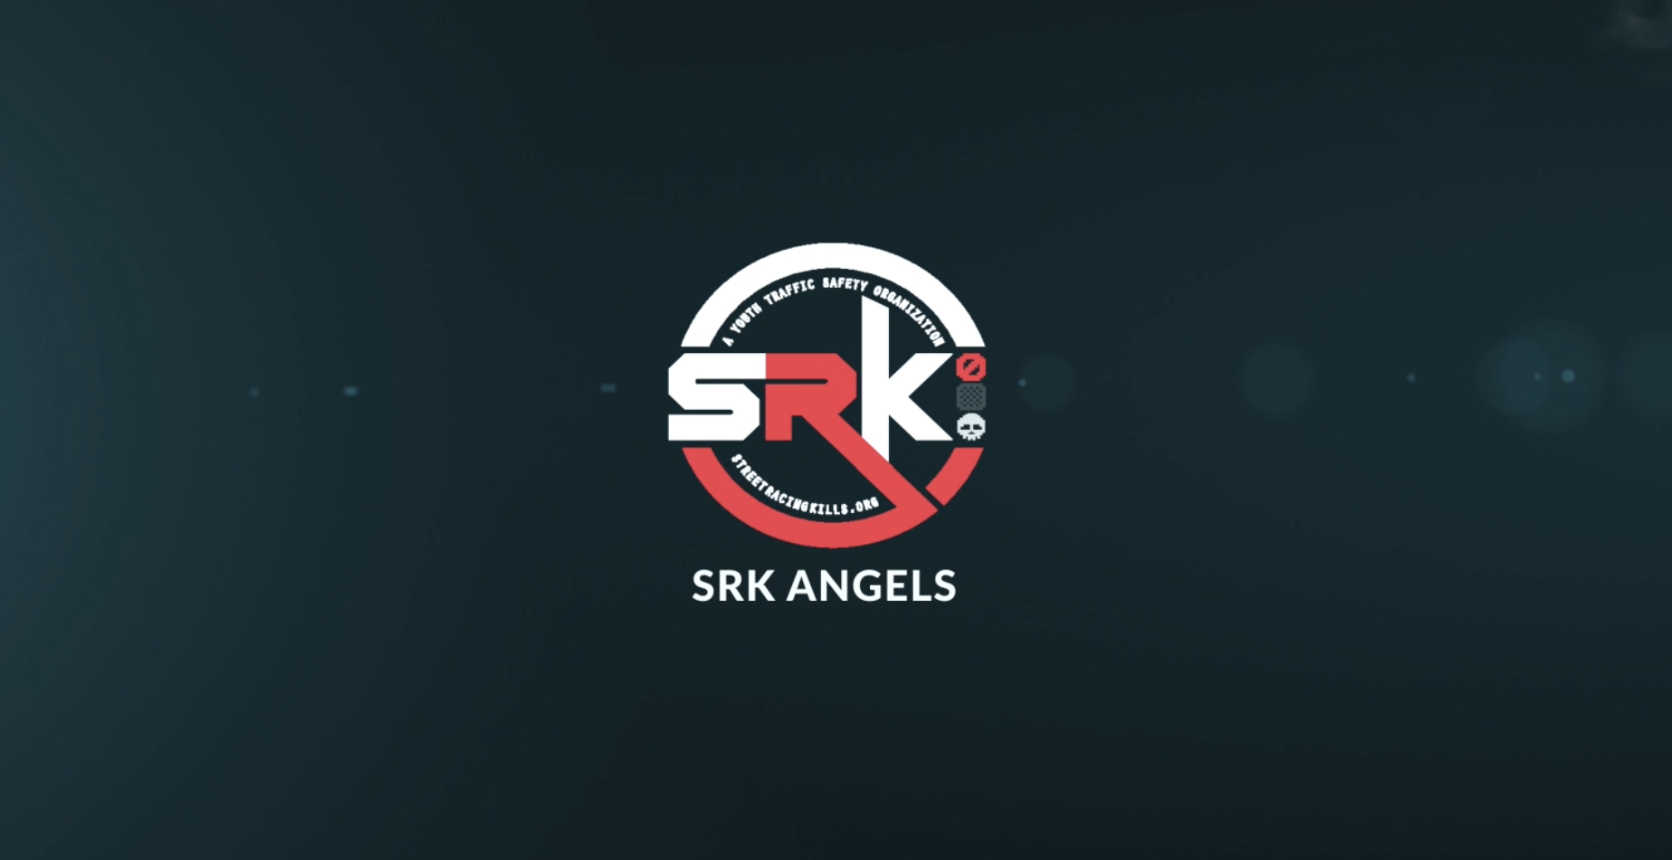 Ready made deisgns for srk logo